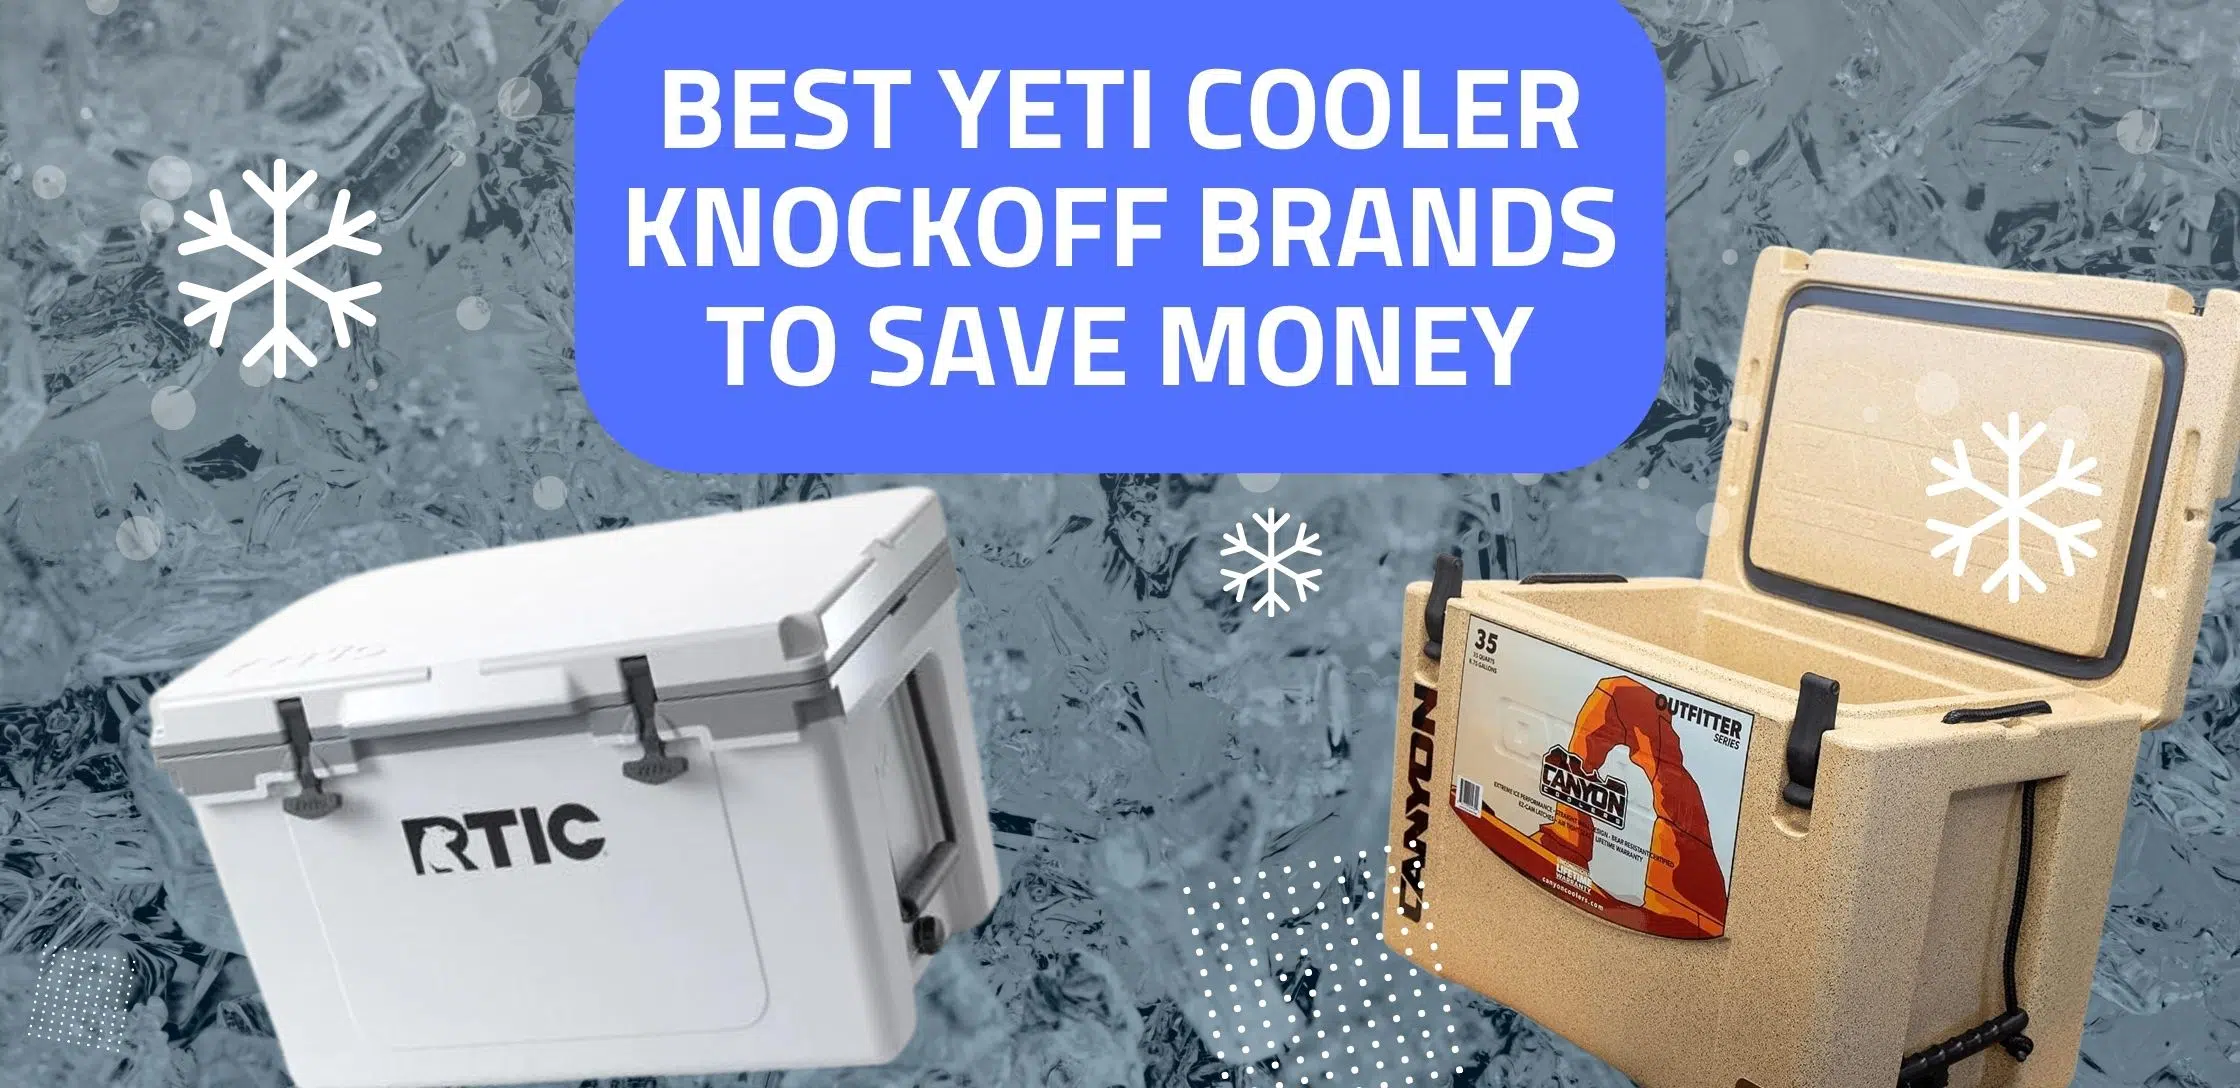 https://yofreesamples.com/wp-content/uploads/2022/07/Best-Yeti-Cooler-Knockoff-Brands-To-Save-Money.jpg